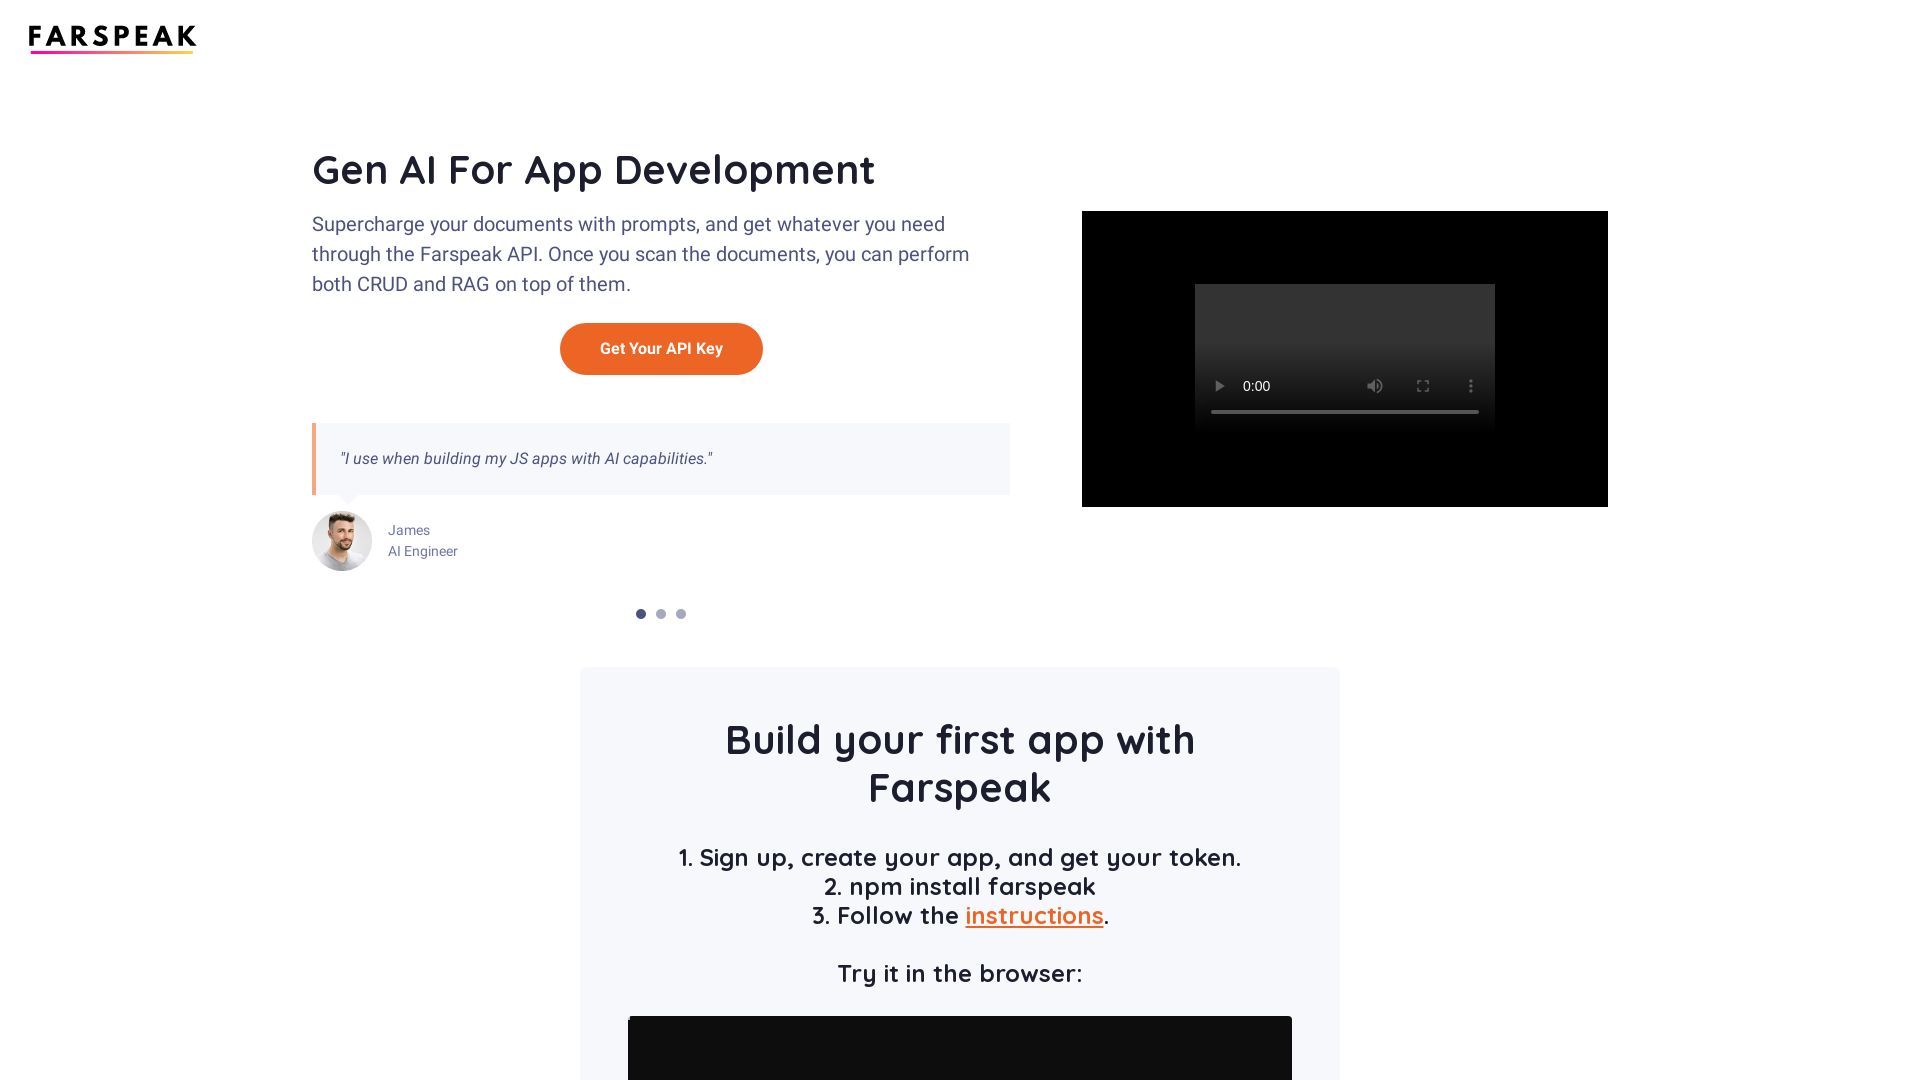 Farspeak - Gen AI For App Development